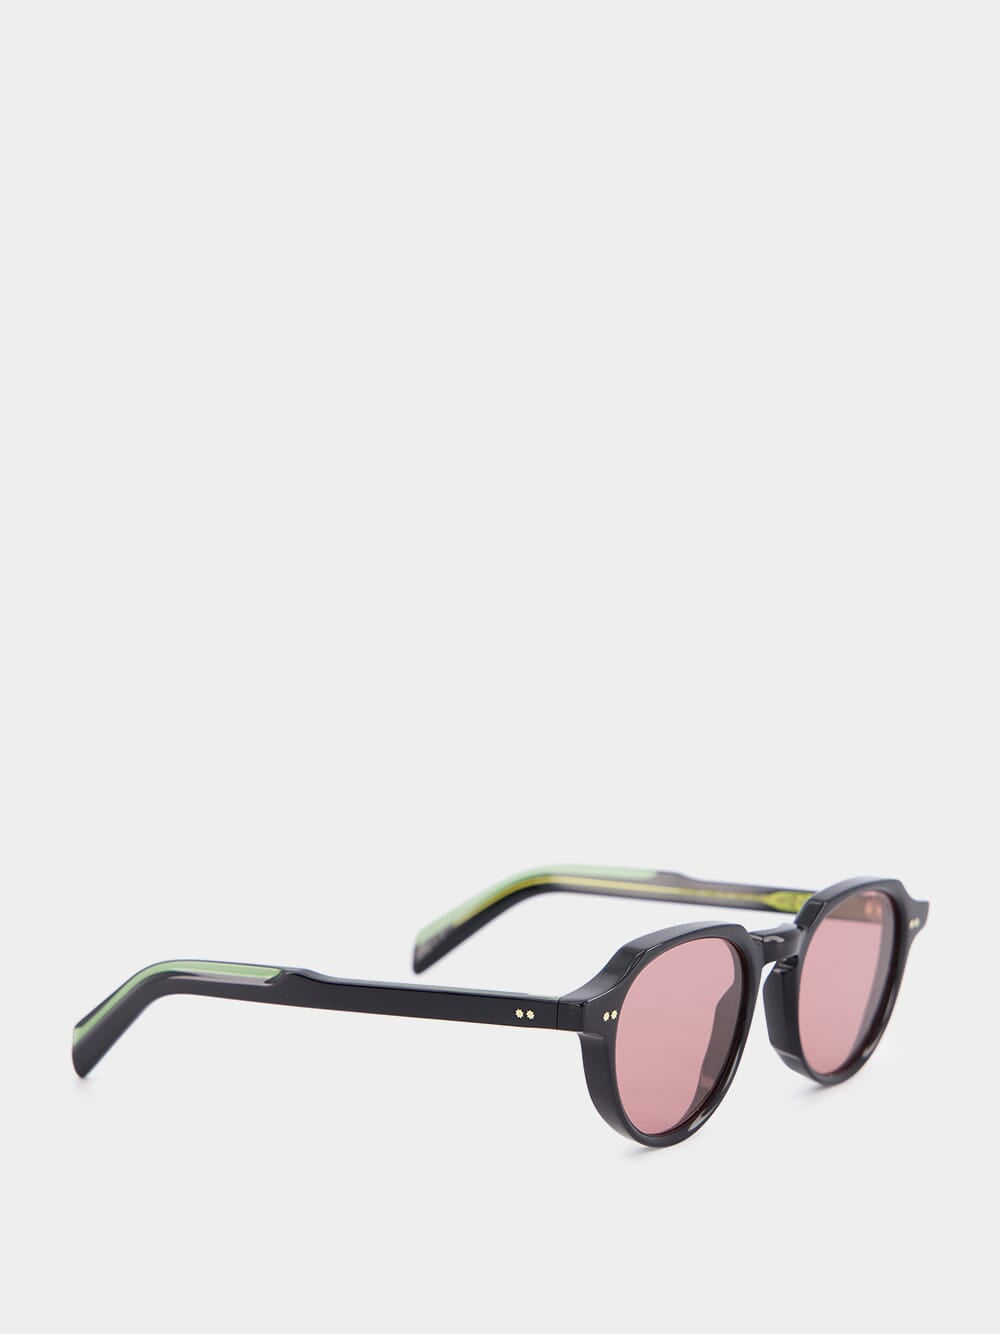 GR06 Black Round Sunglasses